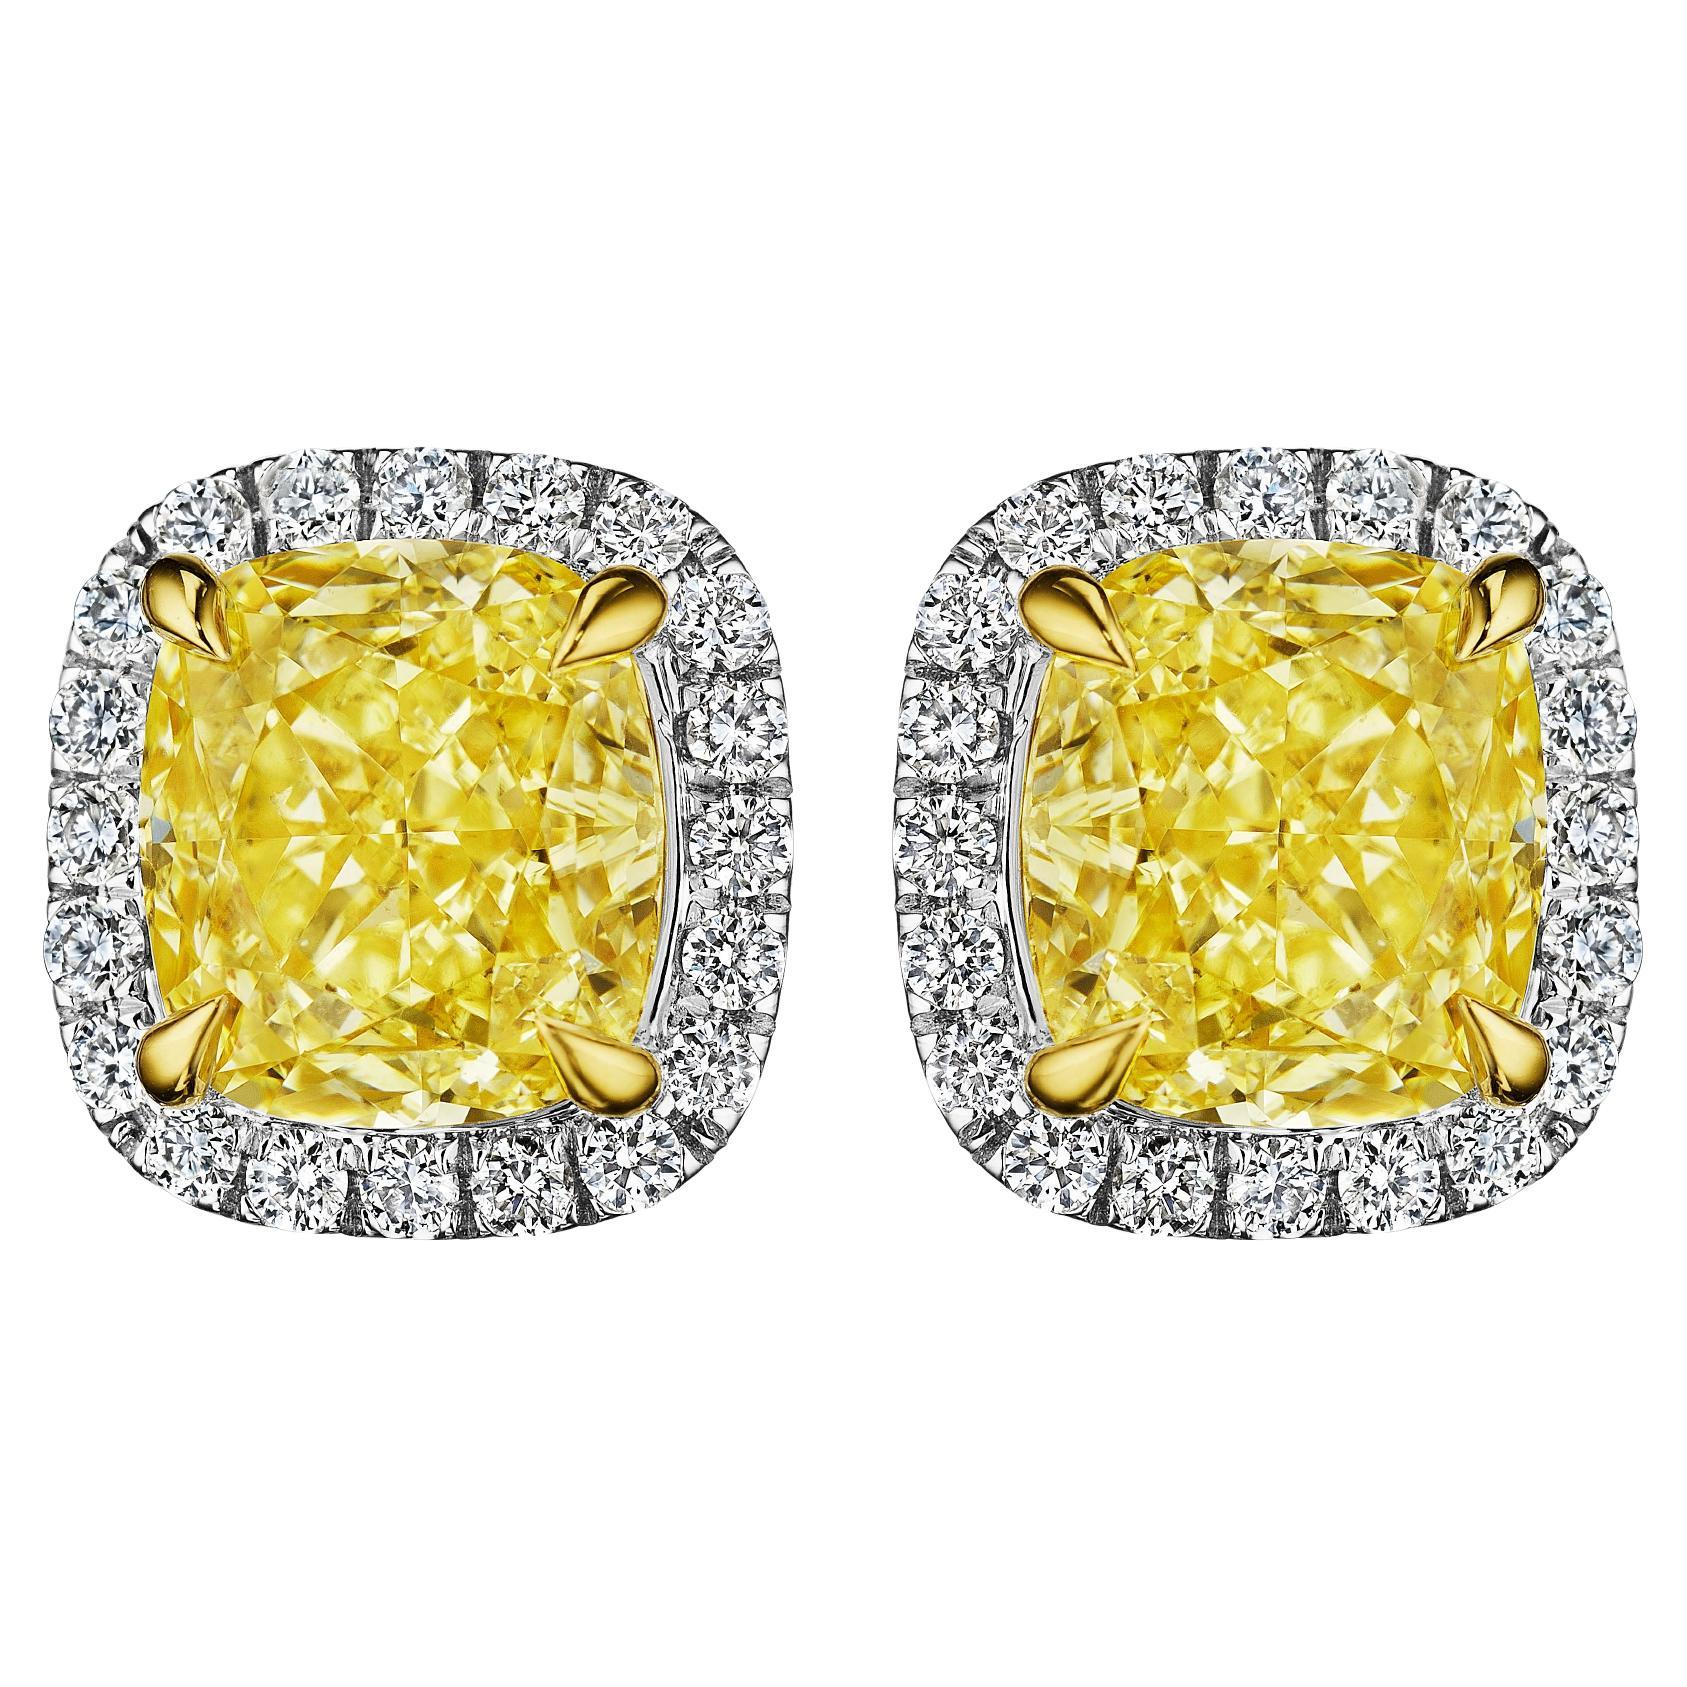 4.24ct GIA Certified Fancy Yellow Cushion & Round Diamond Earrings in 18KT Gold